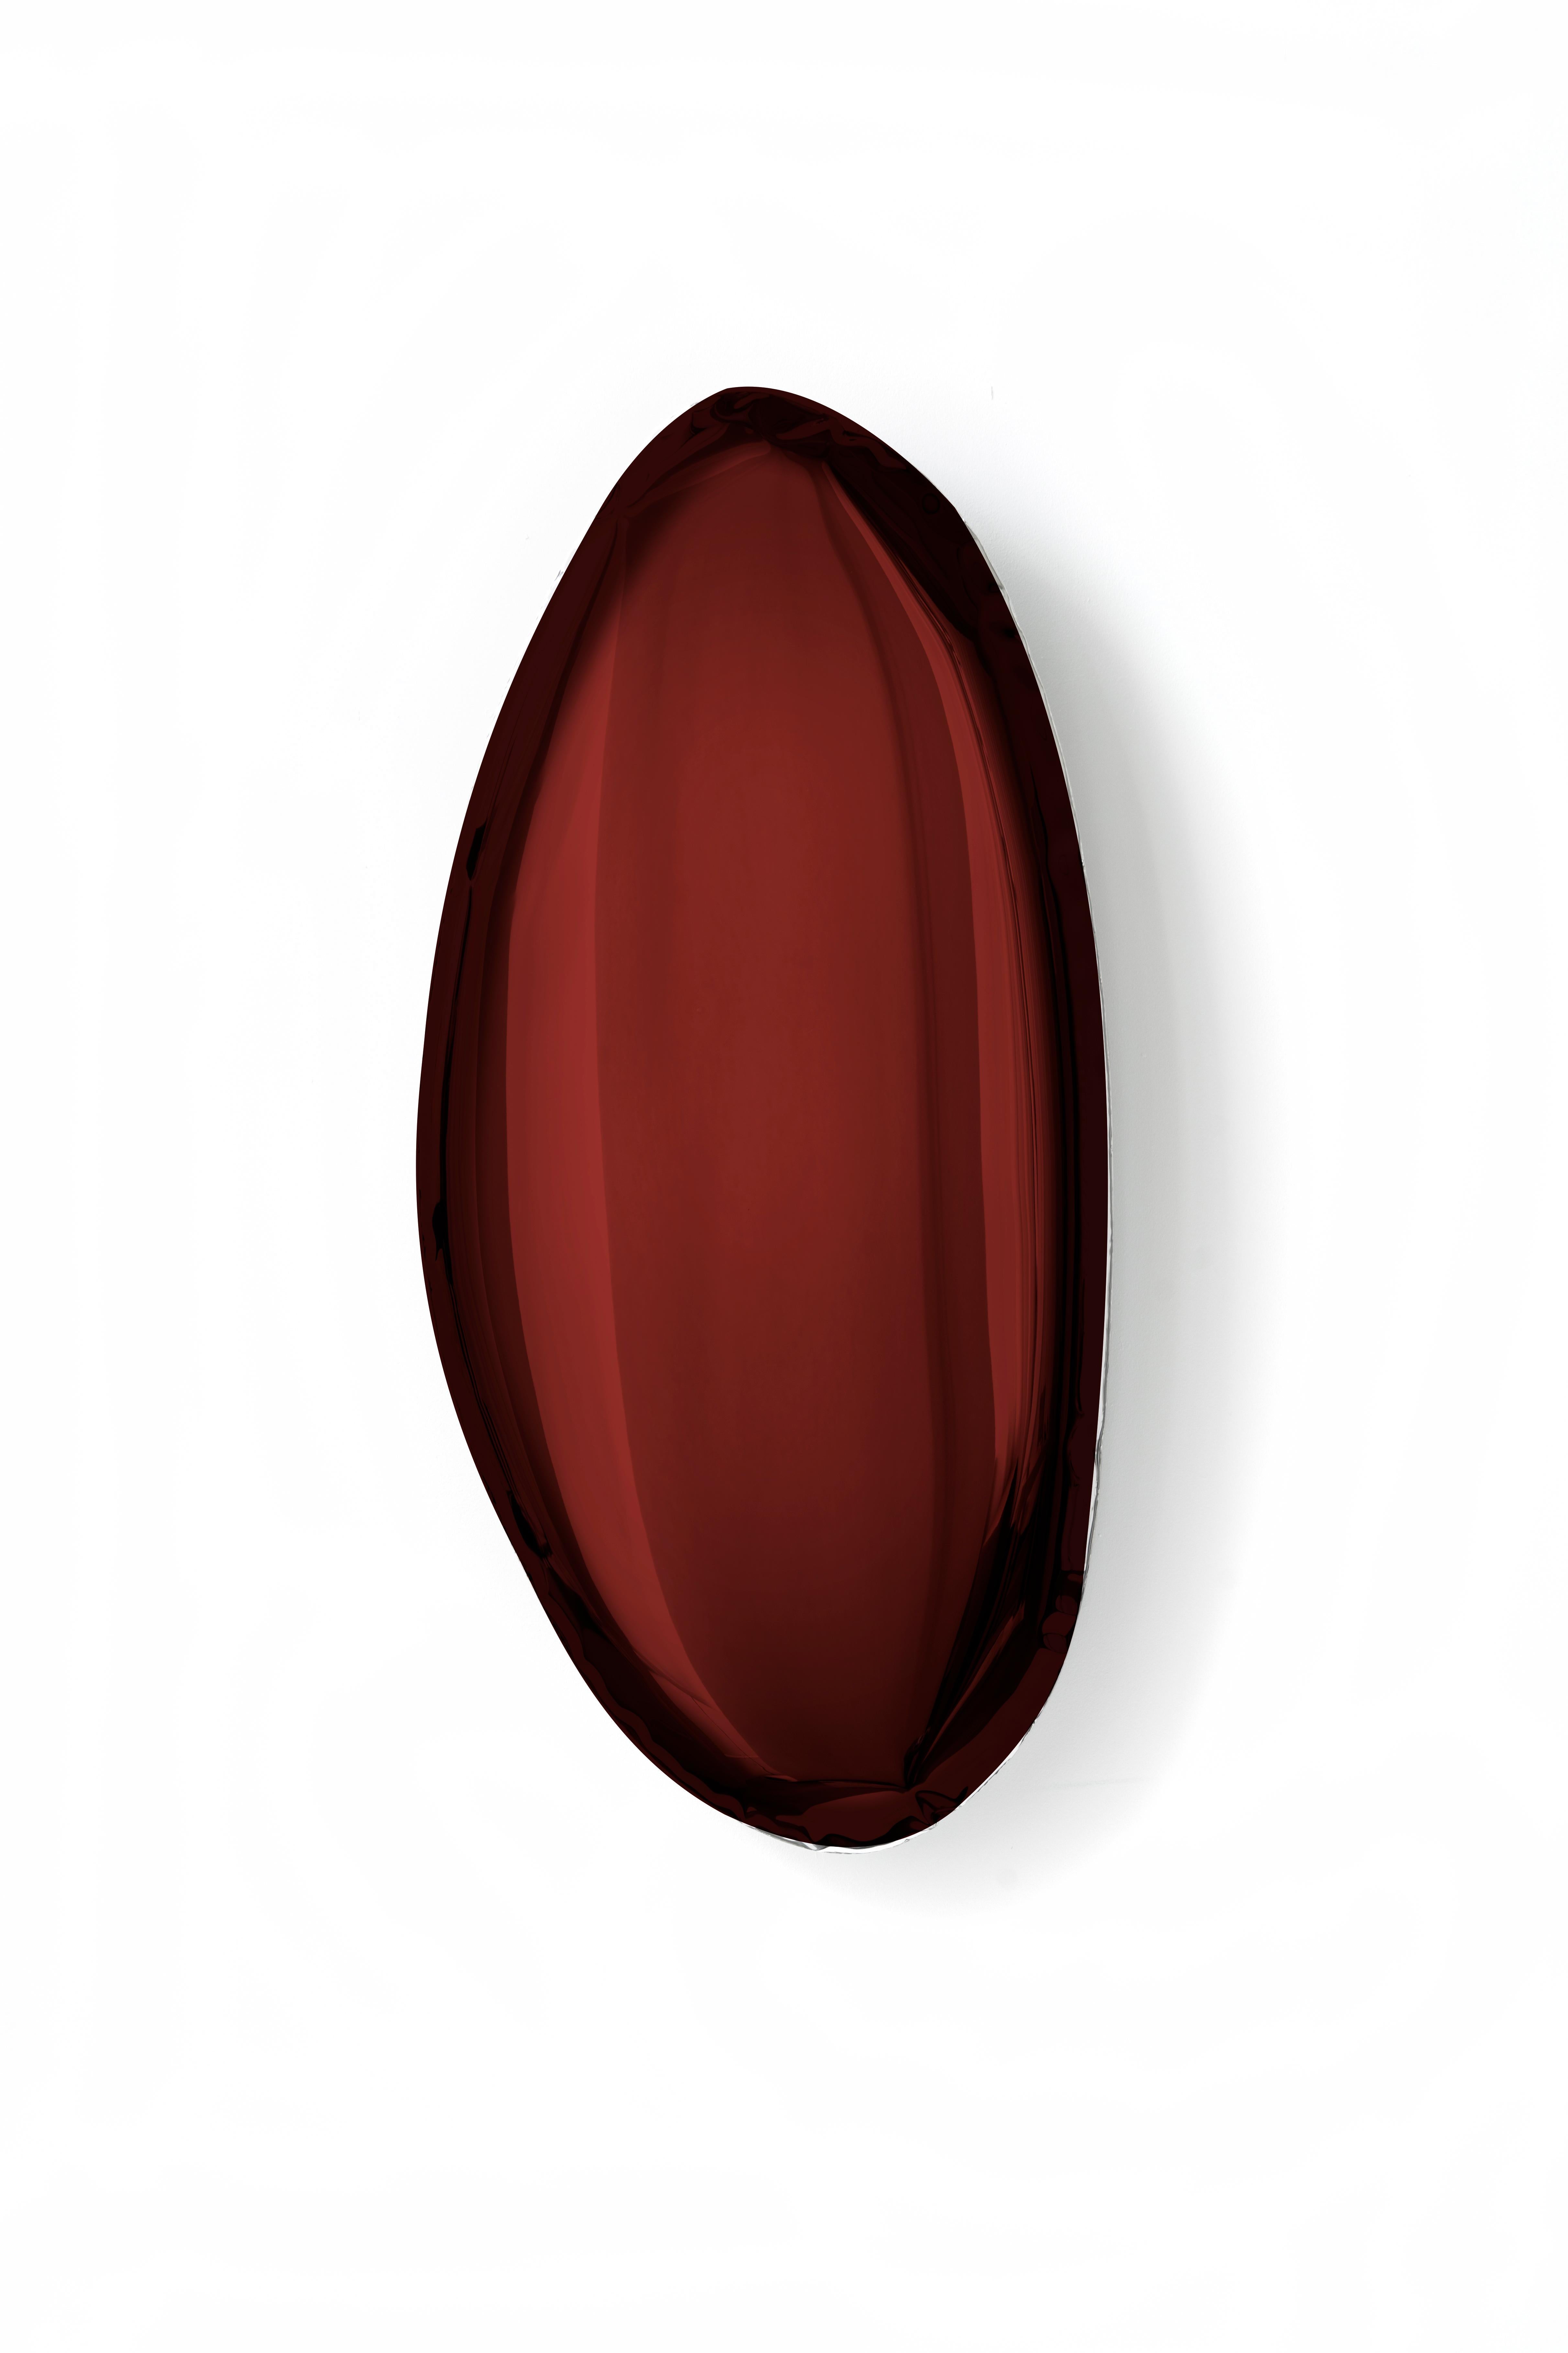 Minimalist Mirror Tafla O2 Rubin Red, in Polished Stainless Steel by Zieta For Sale